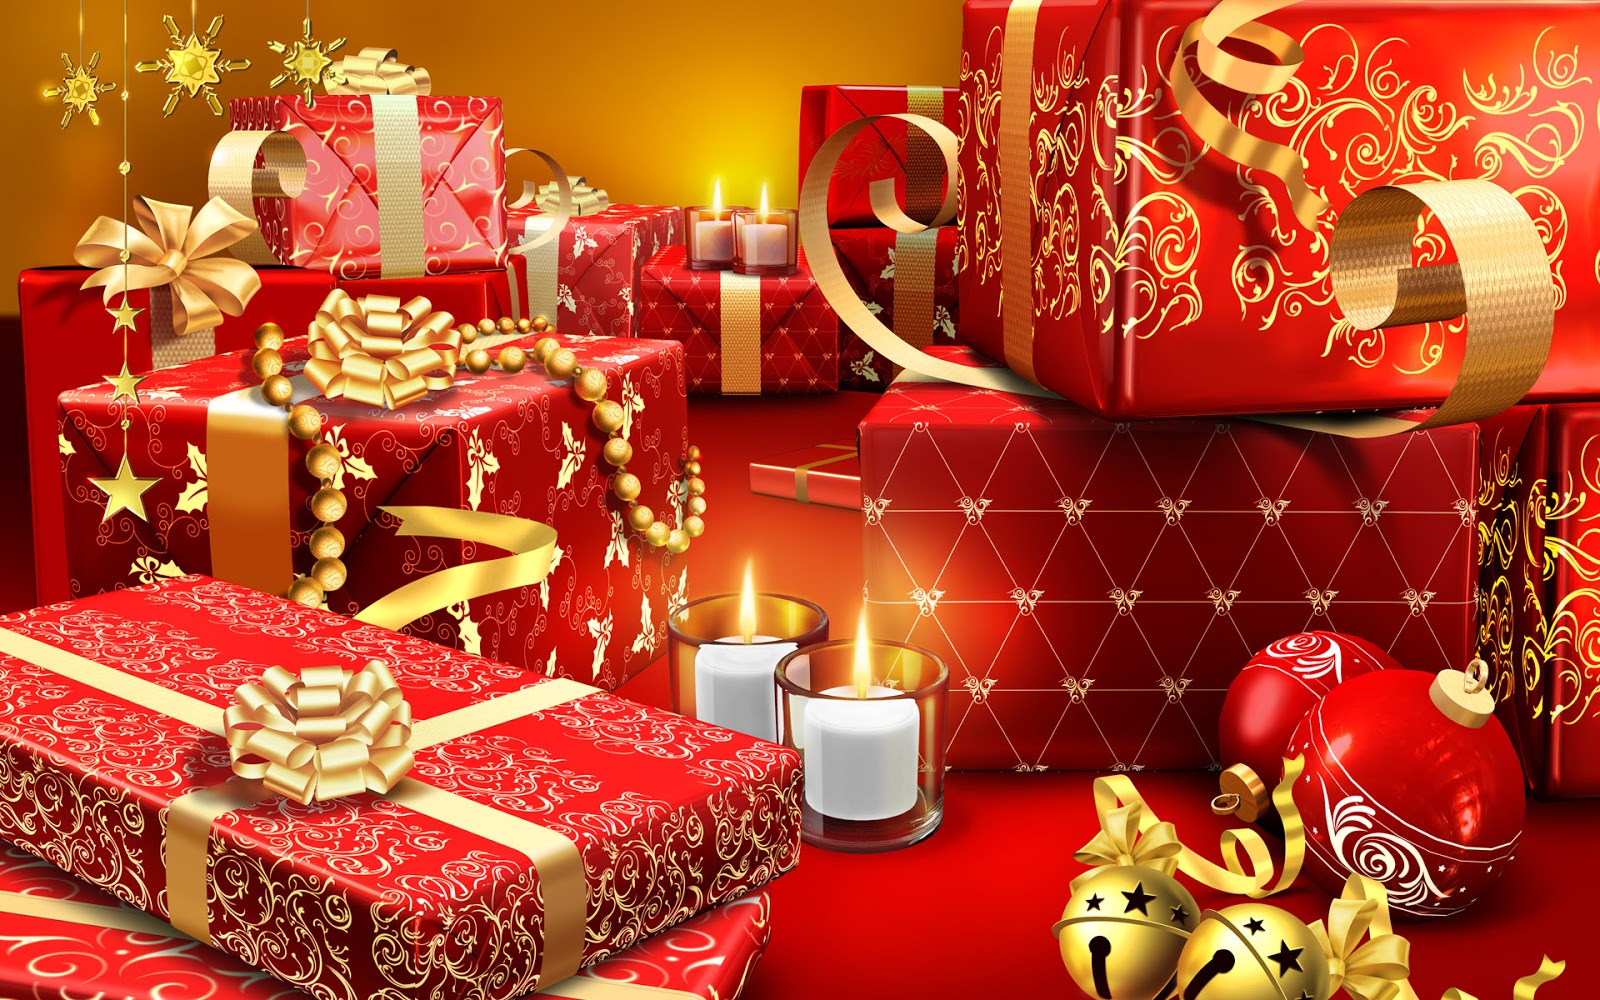 Christmas gift Guide: Top 6 Christmas gifts idea for Christmas 2012